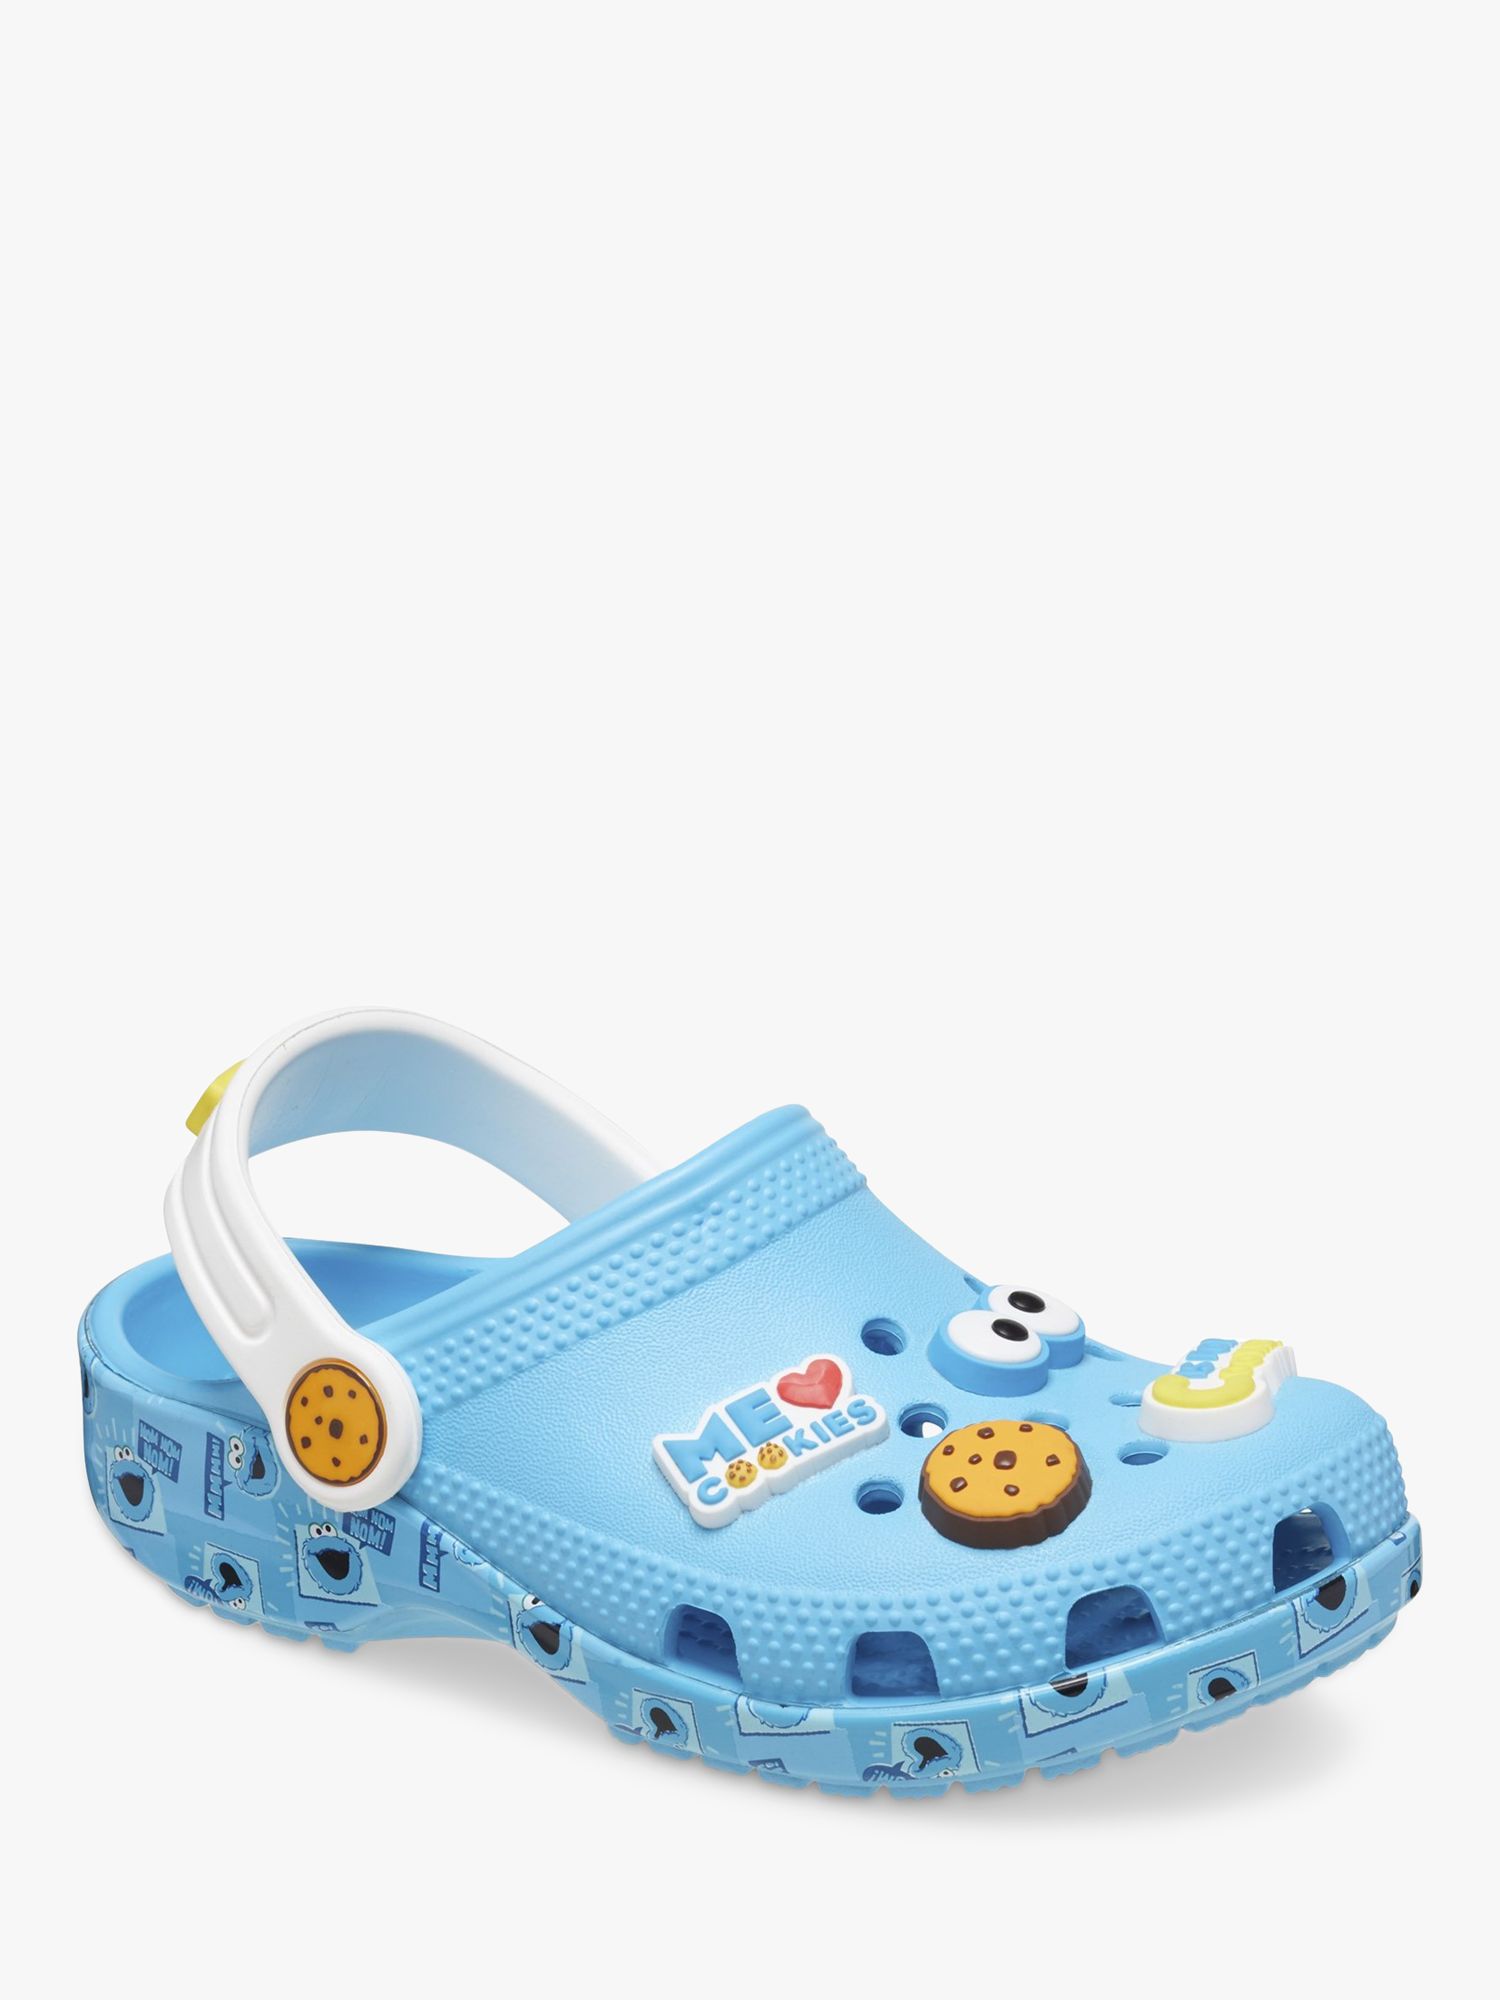 Buy Crocs Kids' Cookie Monster Classic Clogs, Blue/Multi Online at johnlewis.com